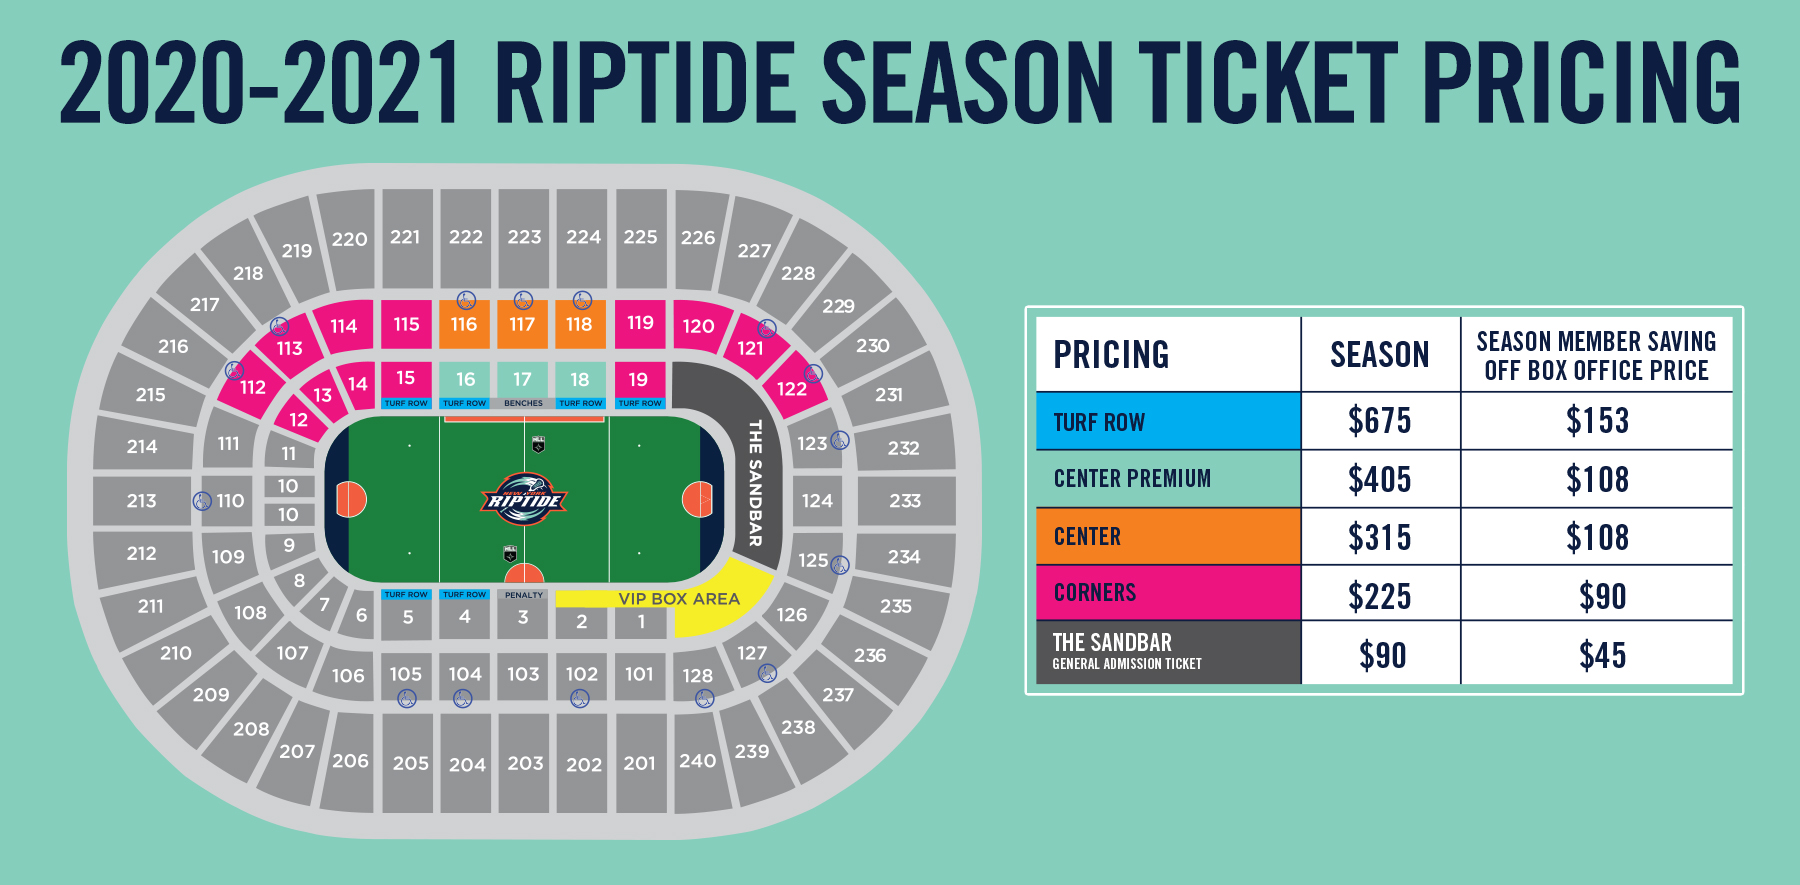 2020-2021 Riptide lacrosse season ticket pricing